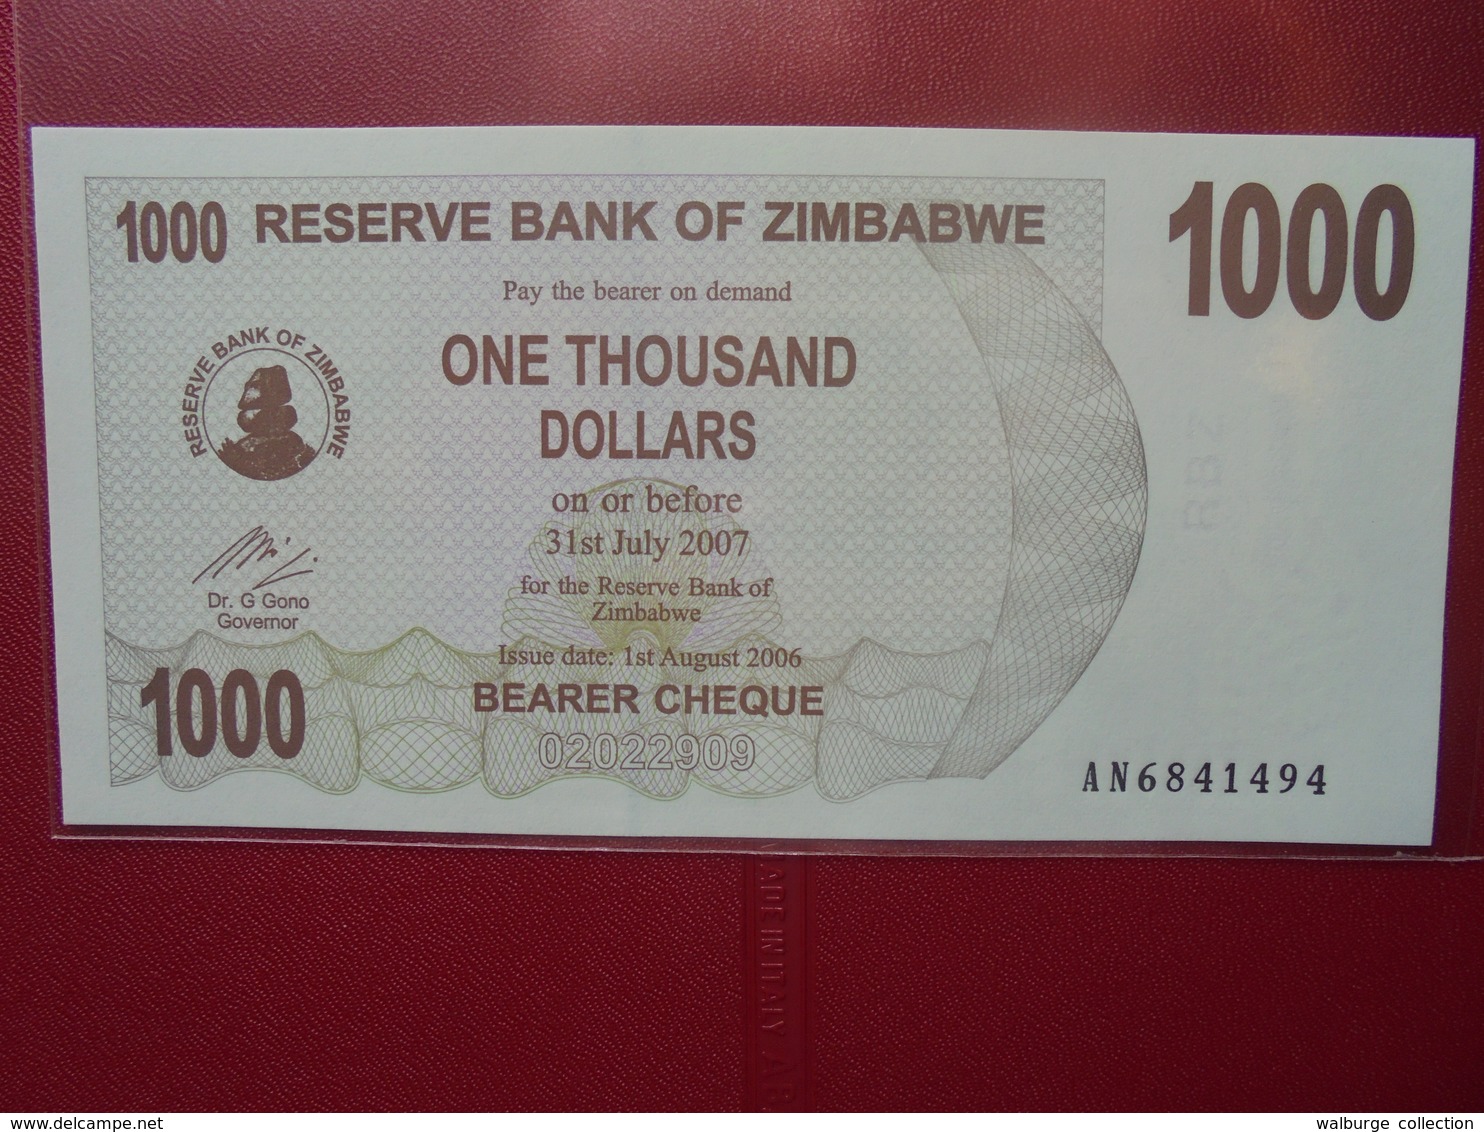 ZIMBABWE 1000 $ 2007 (BEARER CHEQUE) PEU CIRCULER/NEUF - Zimbabwe